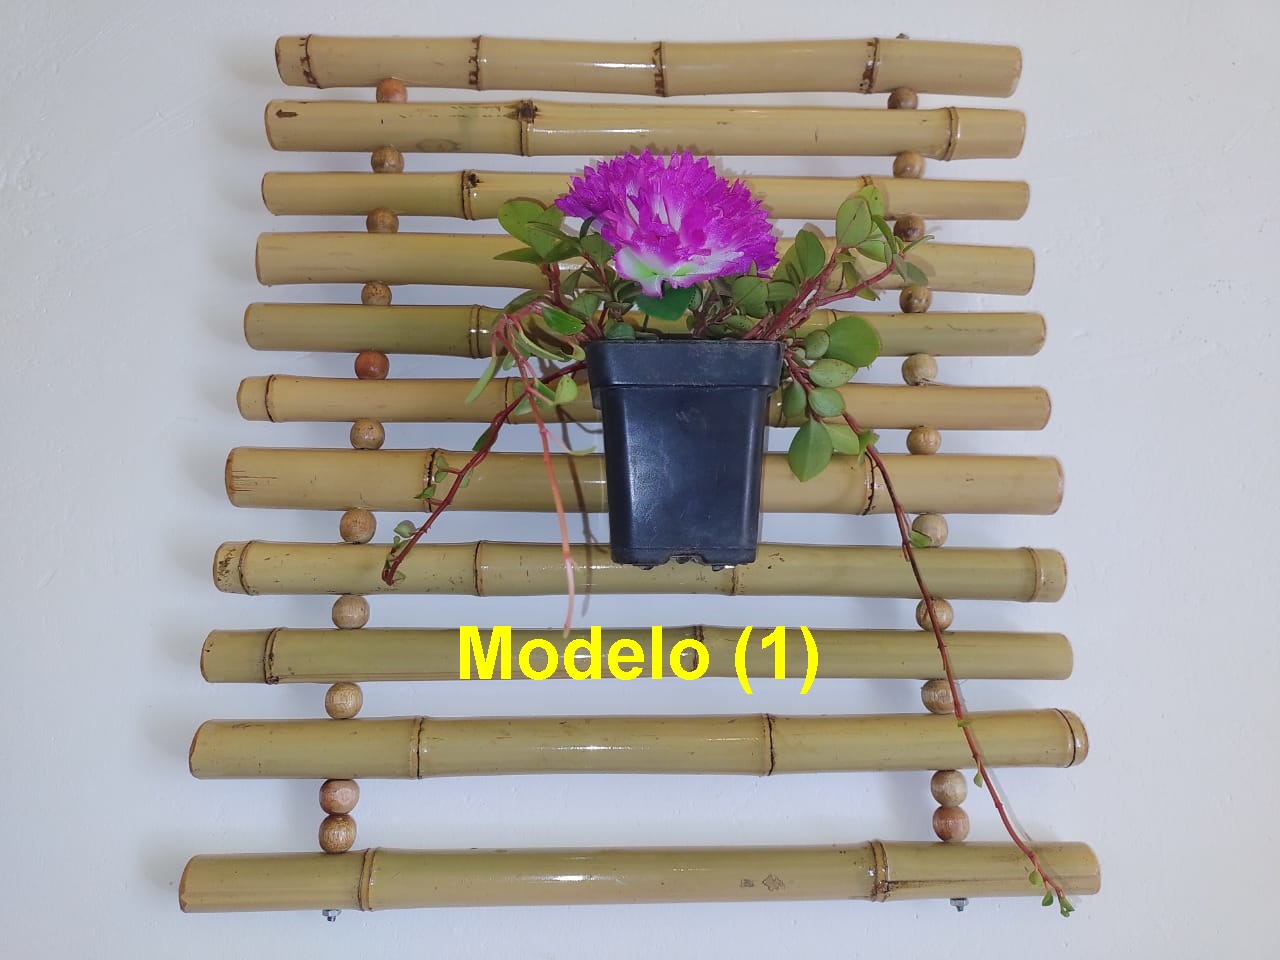 Suporte de bambu para plantas modelo (1)